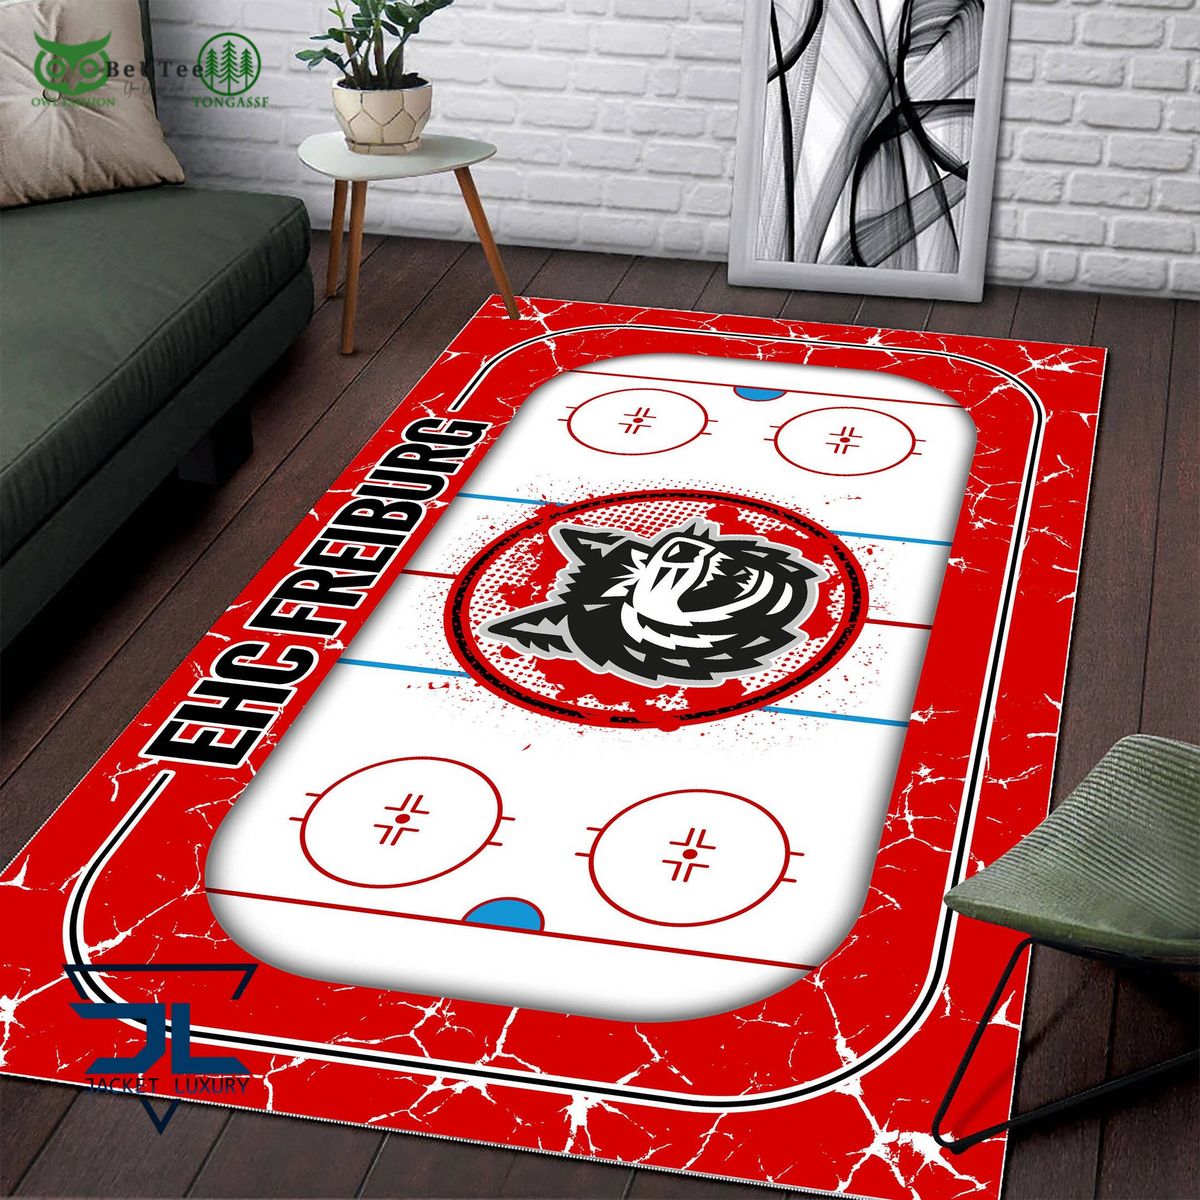 ehc freiburg germany ice hockey team carpet rug 2 CFh04